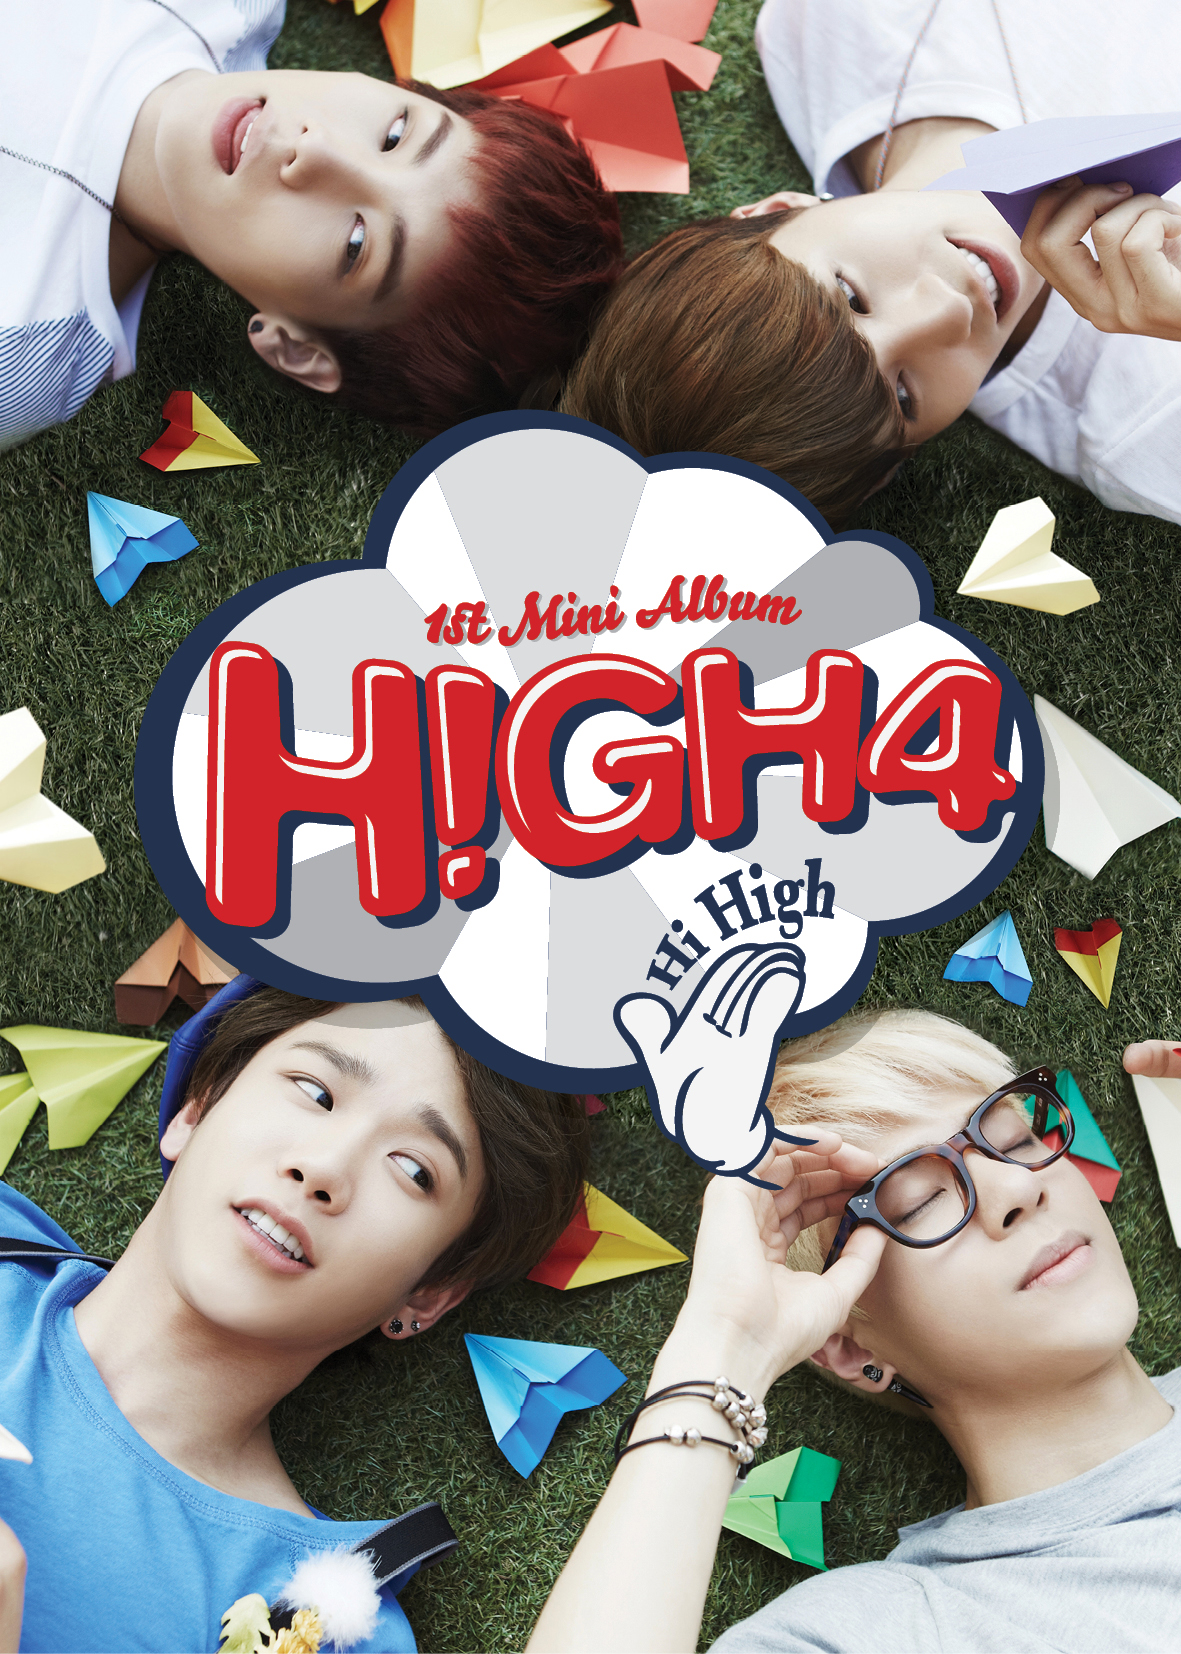 High4 – 1st Mini Album [HI HIGH]